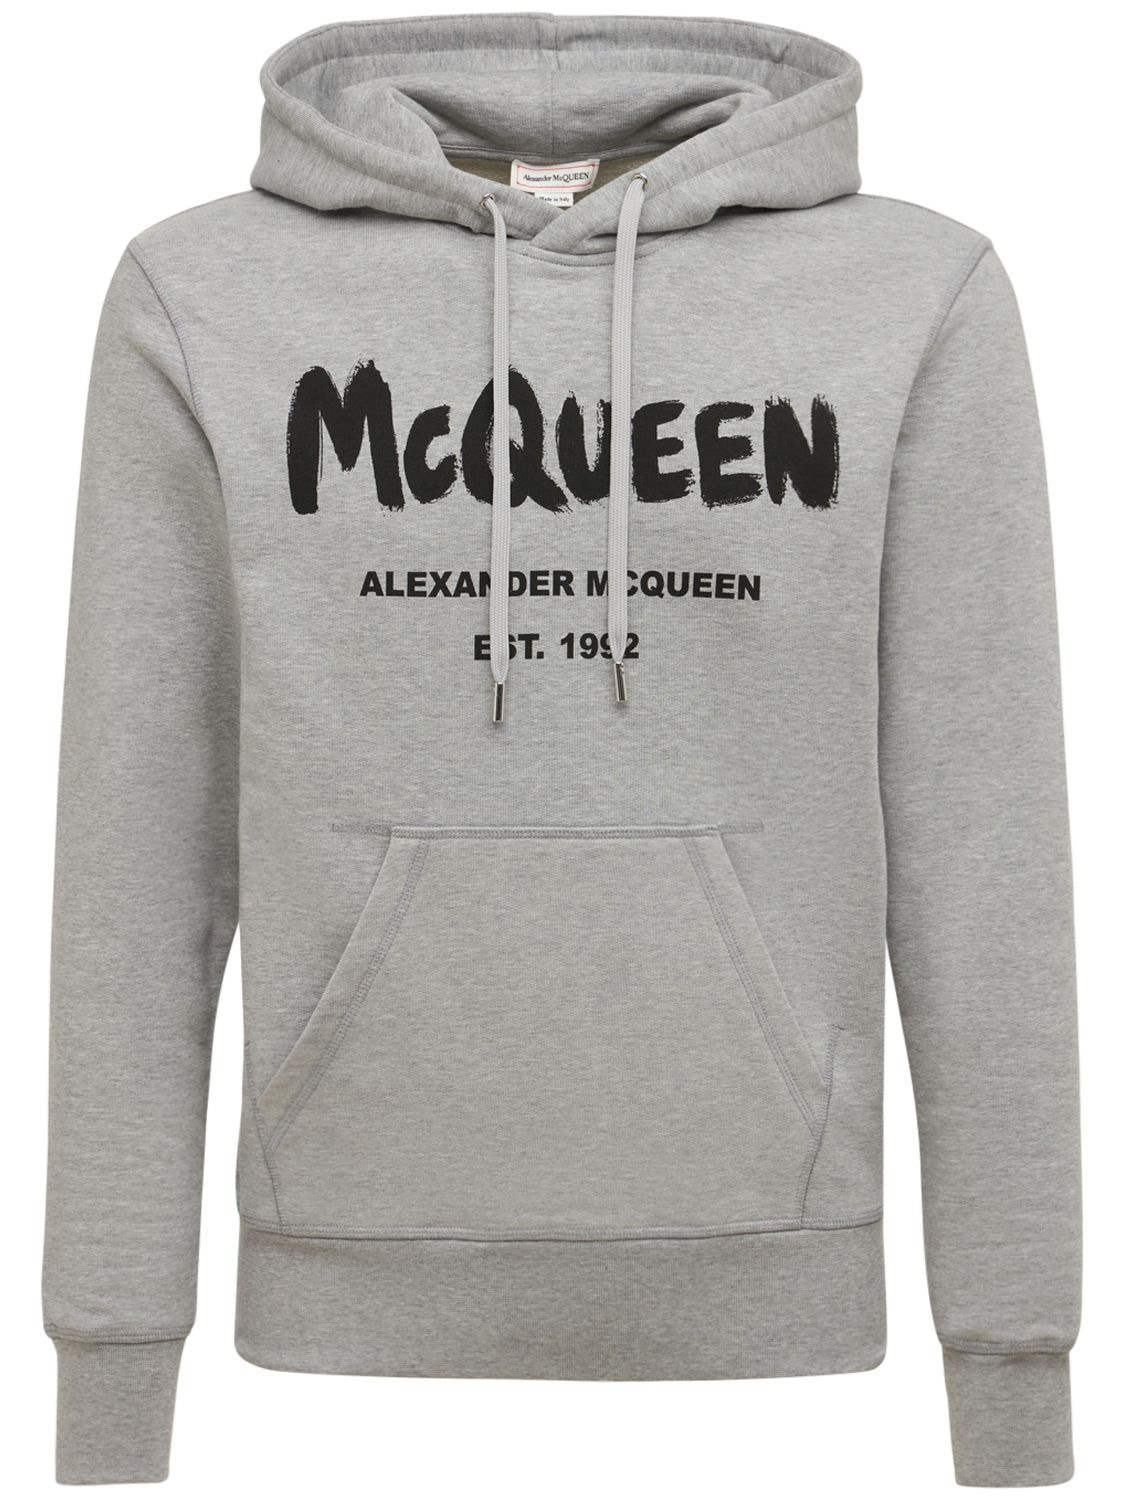 Bedrucktes Sweatshirt Aus Baumwolle - ALEXANDER MCQUEEN - Modalova